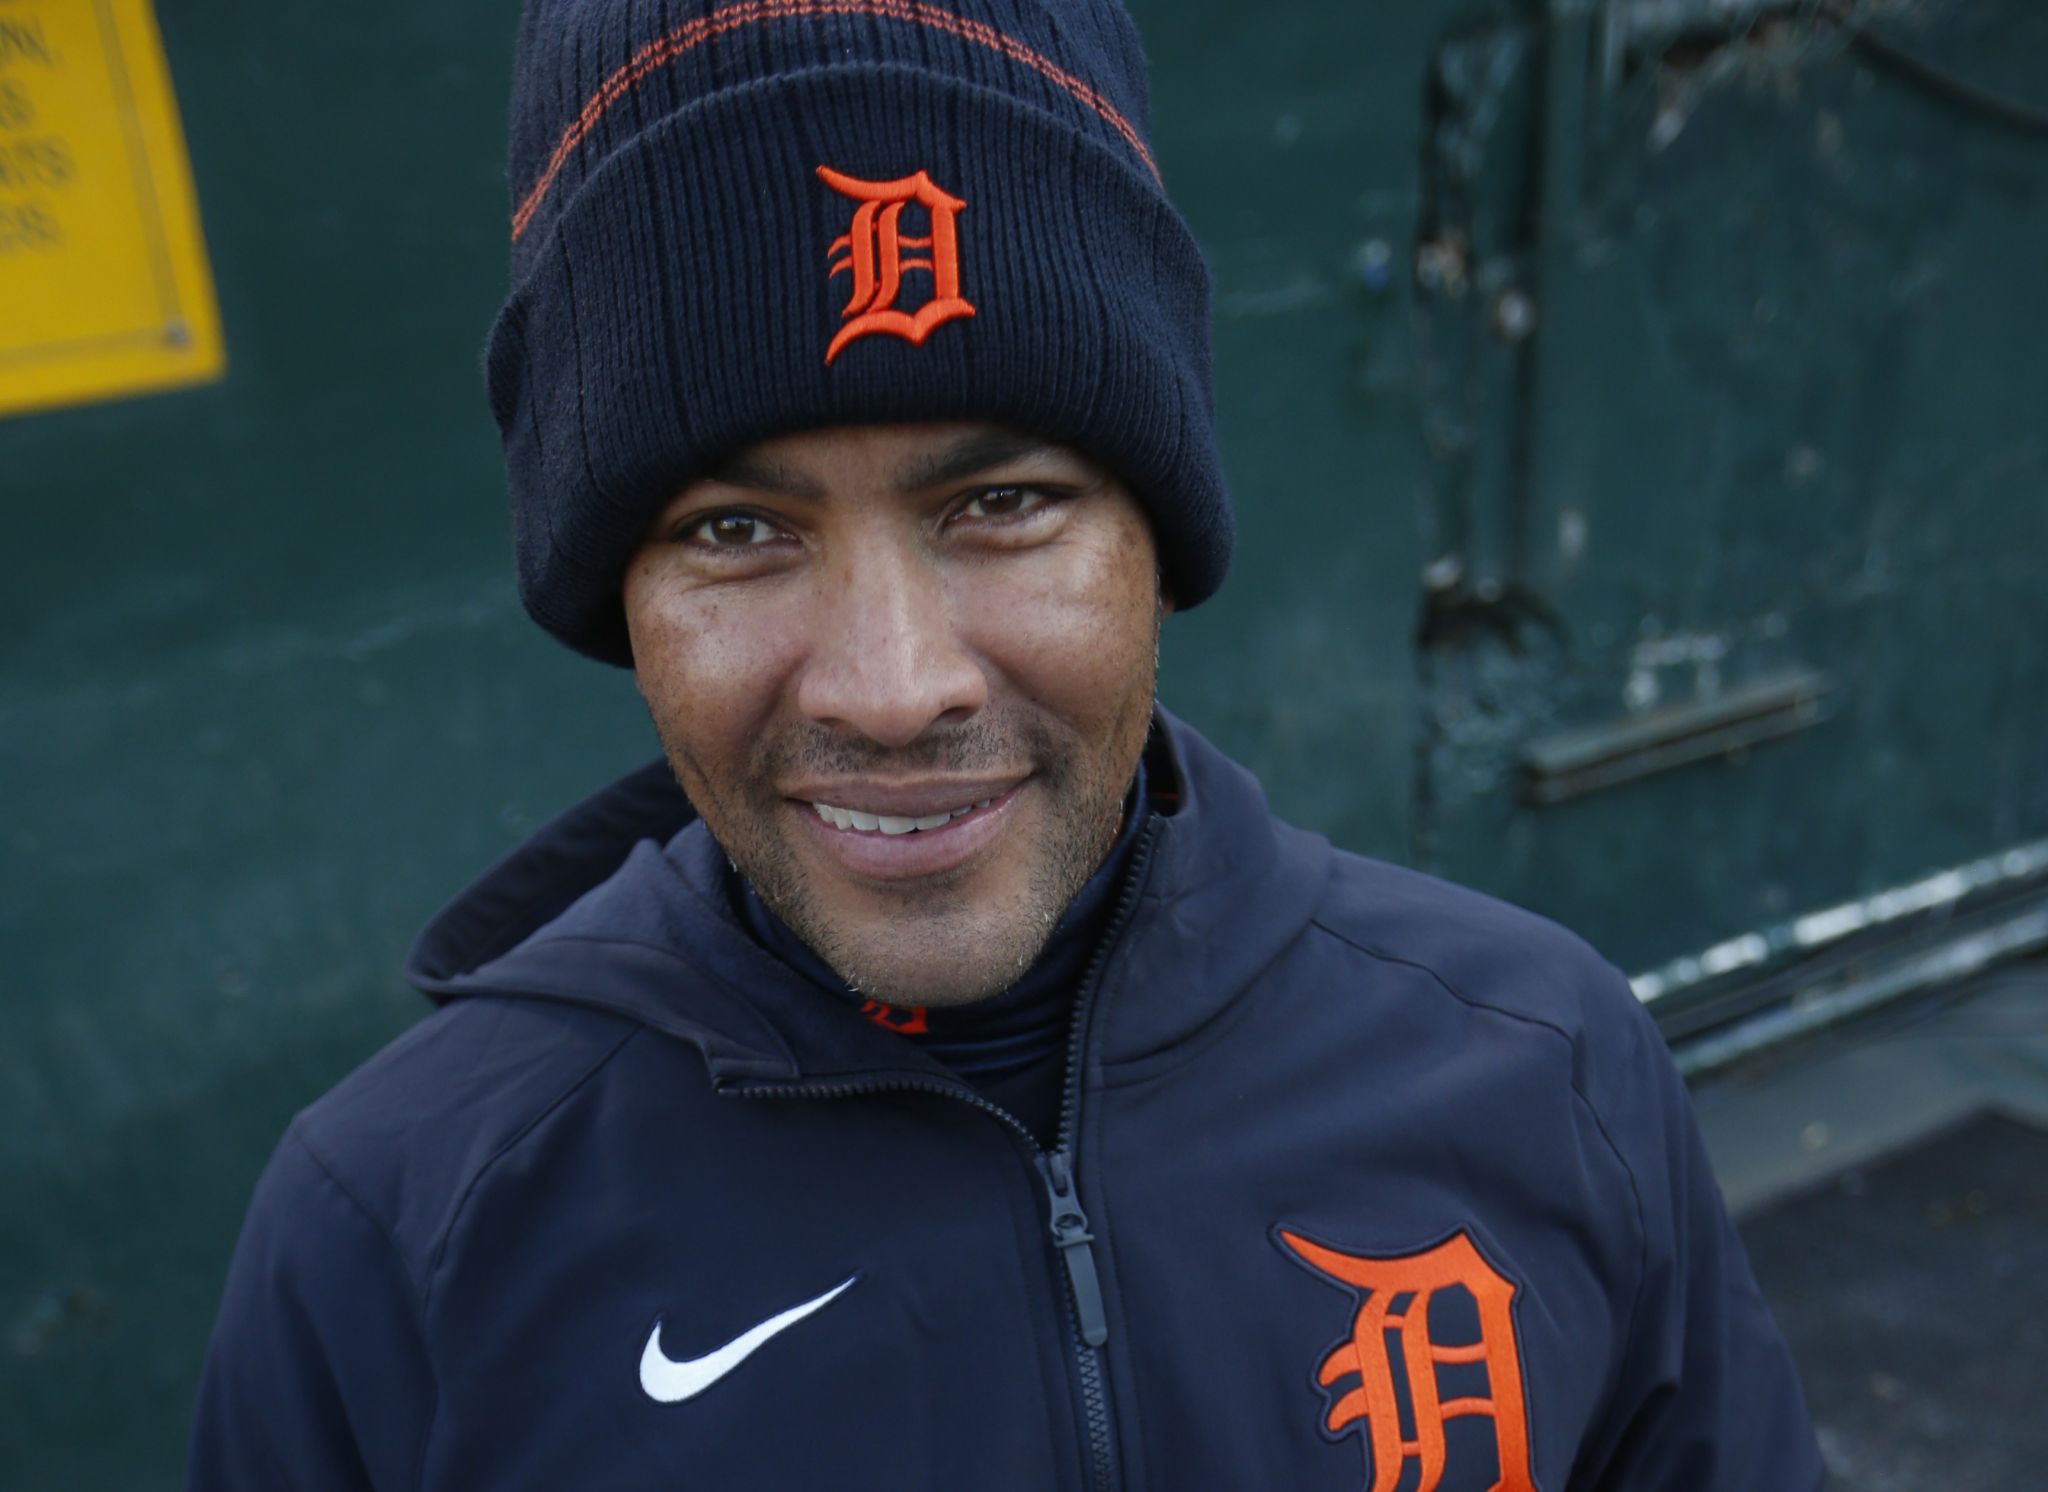 Rice hires Jose Cruz Jr. as new baseball coach